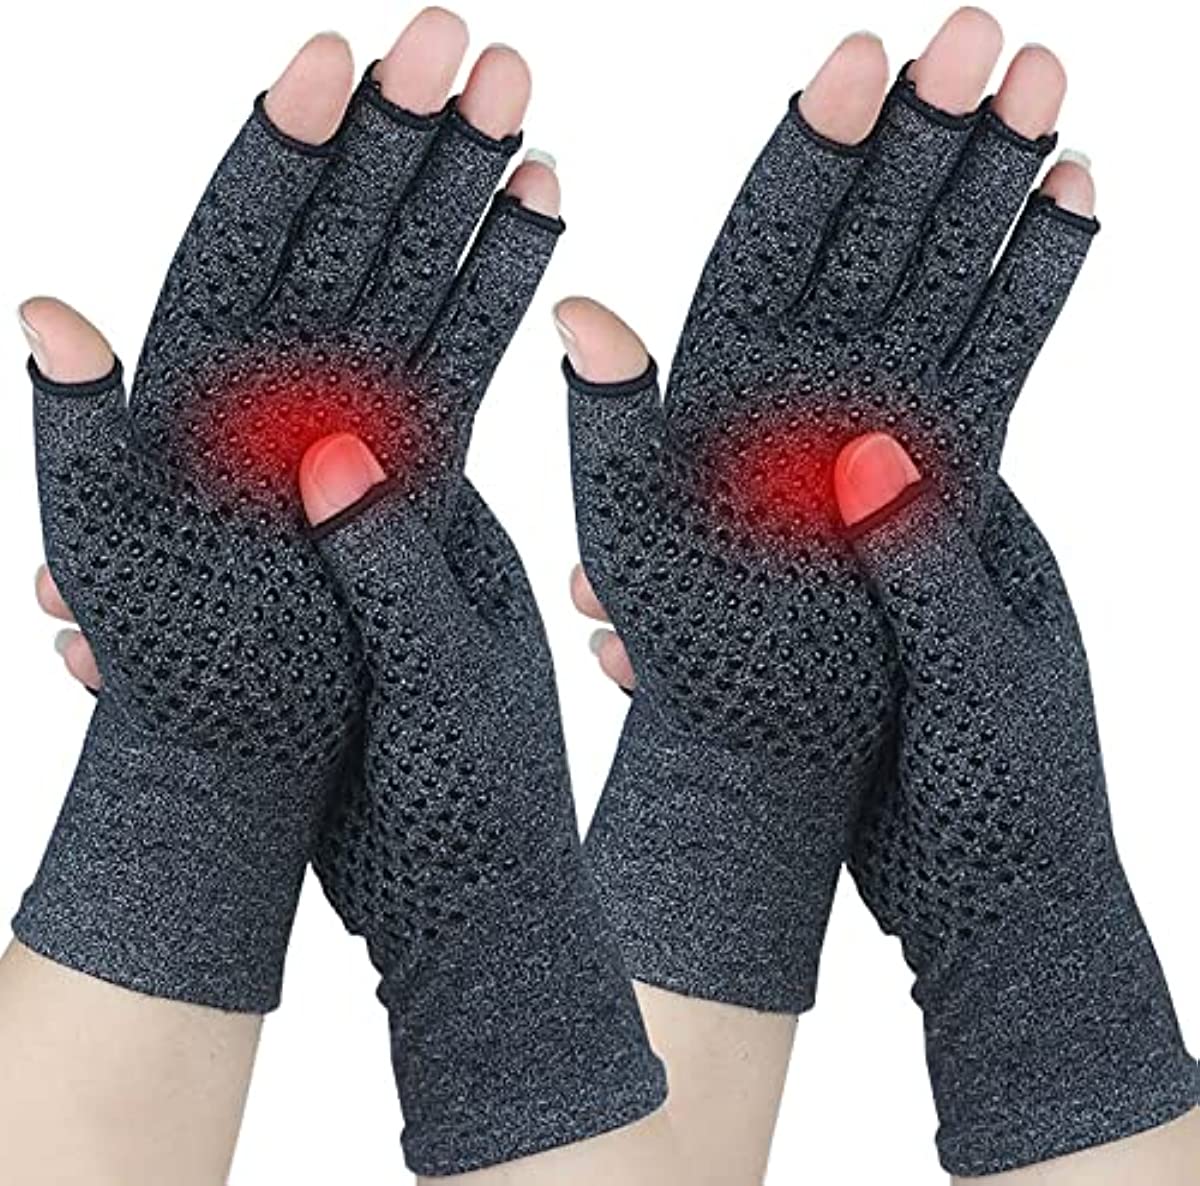 Happymart 2 Pairs Compression Gloves Arthritis Gloves, Fingerless Gloves for Women & Men,Gloves for Rheumatoid & Osteoarthritis (New Black with Anti-slip Dot, Medium-2 Pairs)